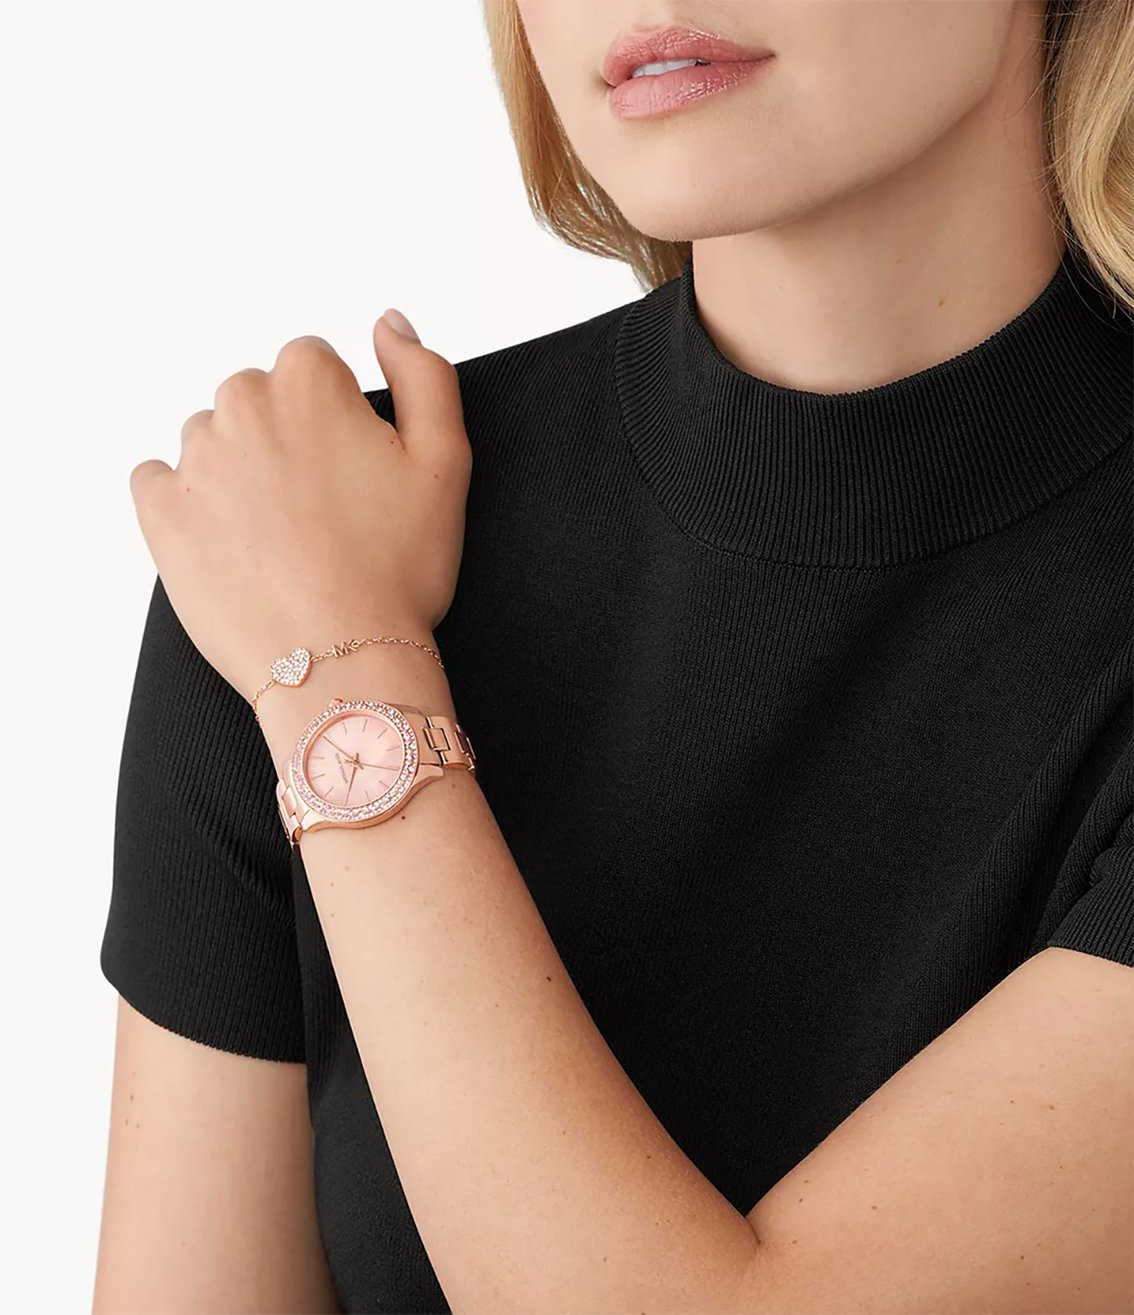 Jam tangan Michael Kors wanita yang stylish